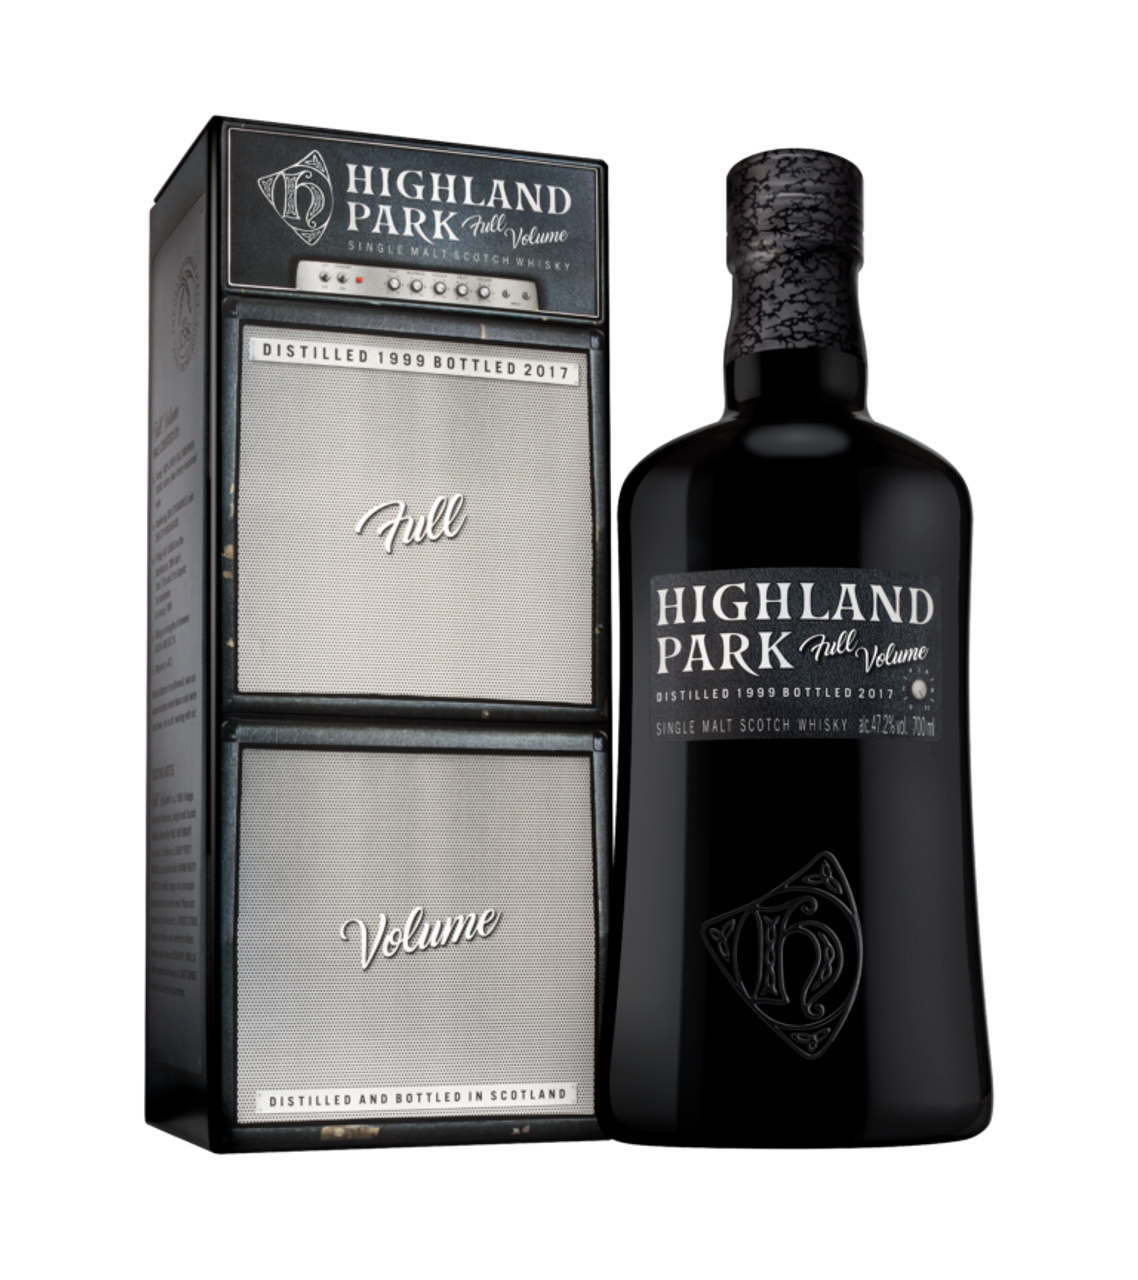 The Old, - Shop Highland Park Year San Full Francisco Whisky - Volume 17